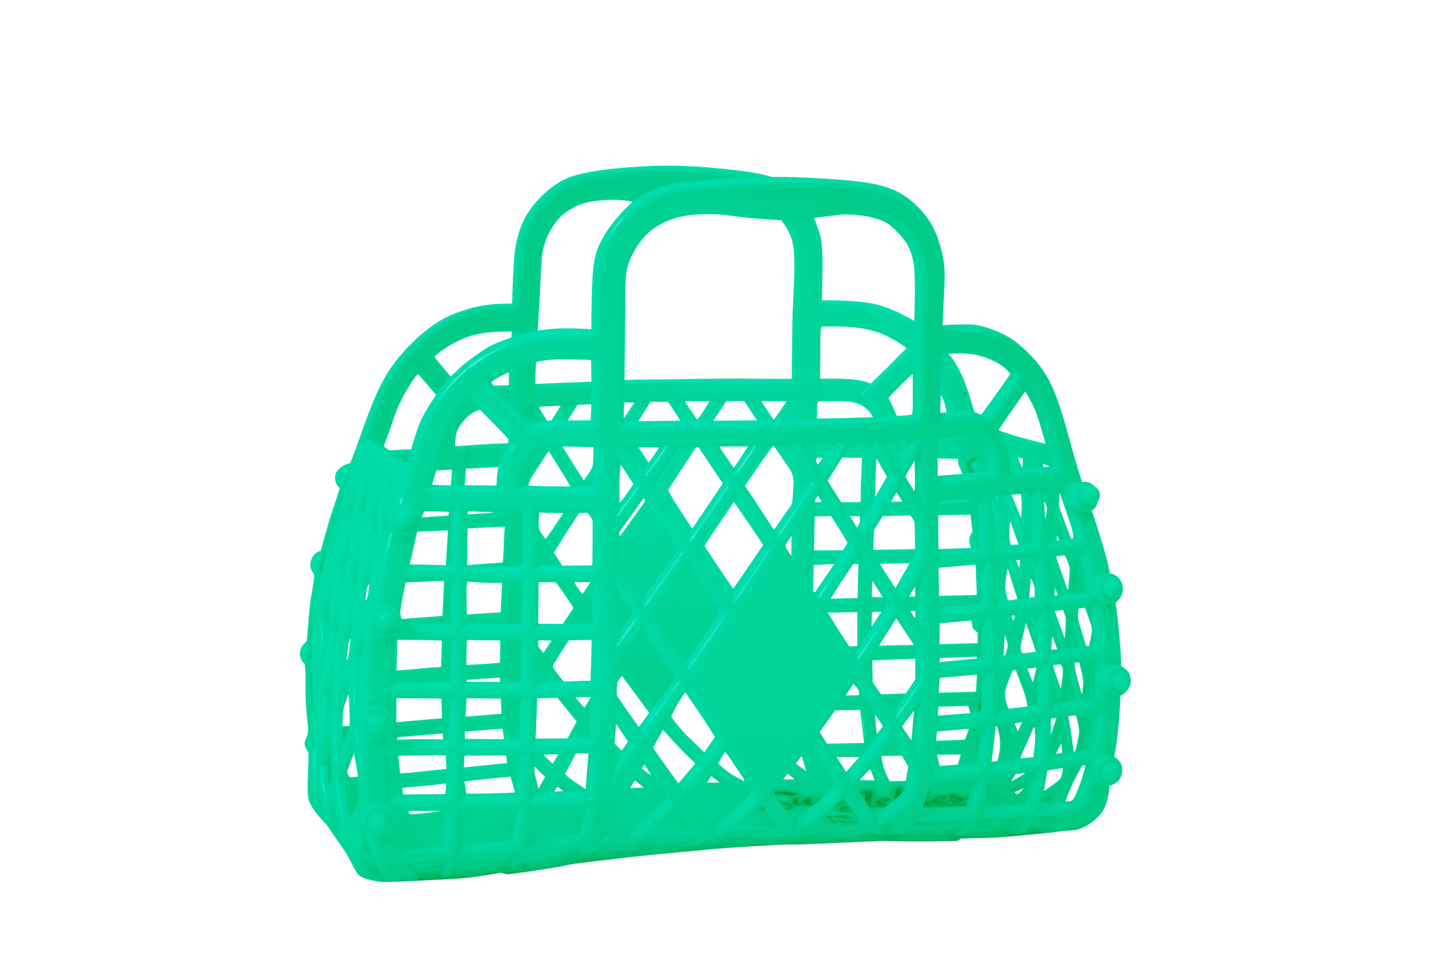 Mini Retro Basket - Green